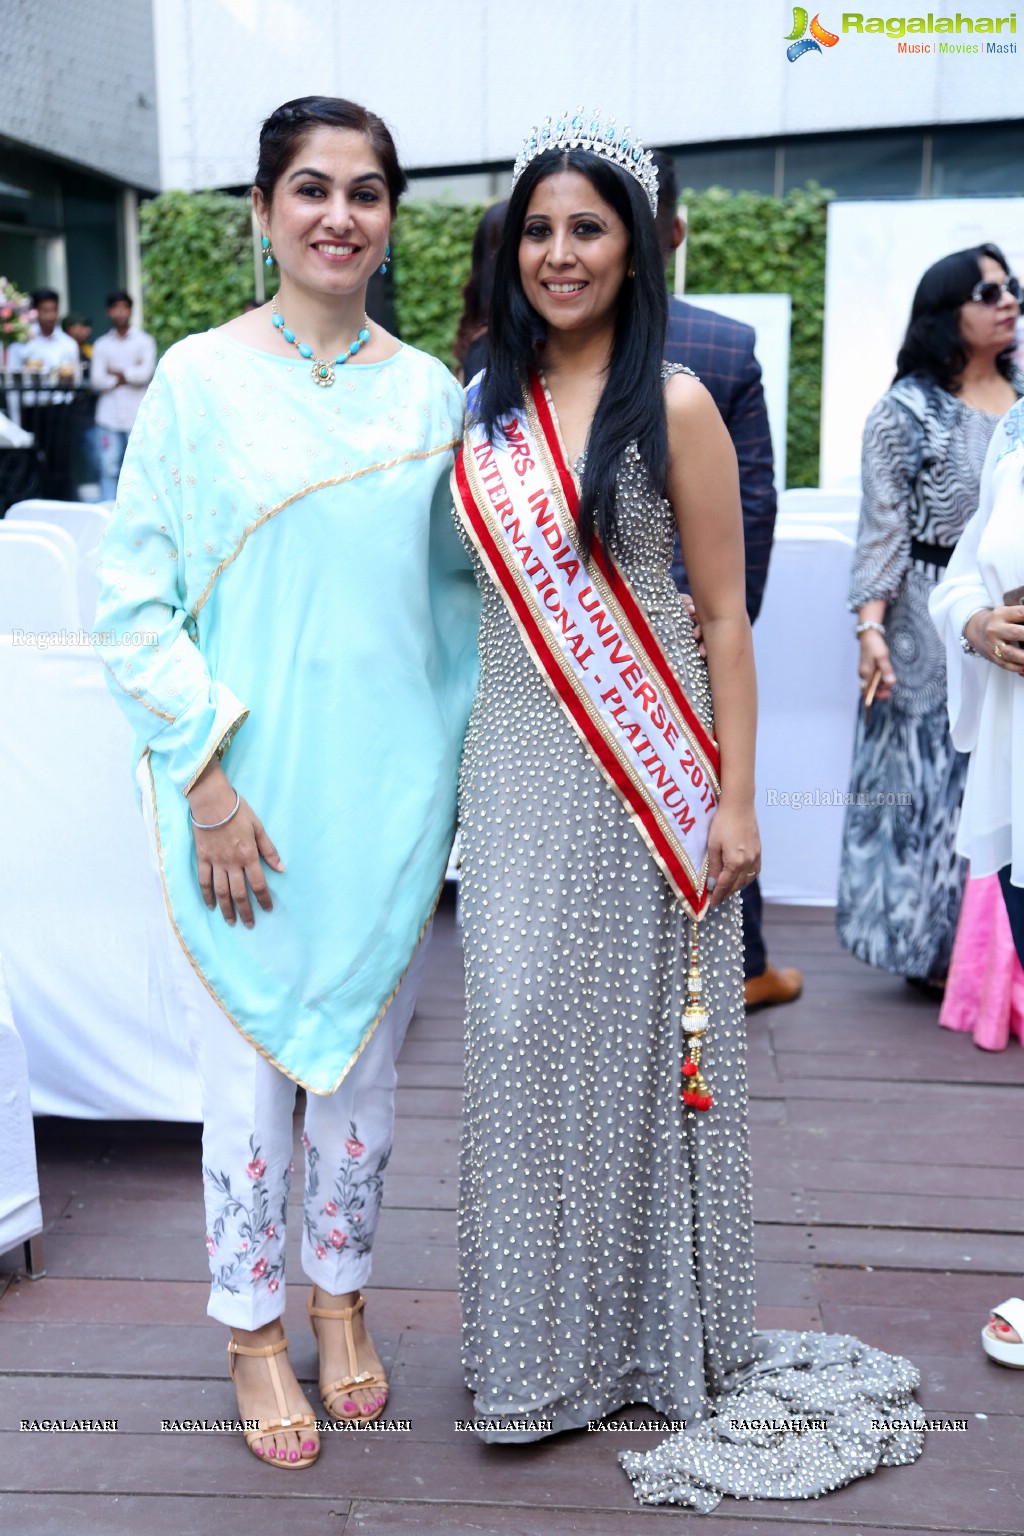 Mrs. India 2018 Grand Curtain Raiser at The Park